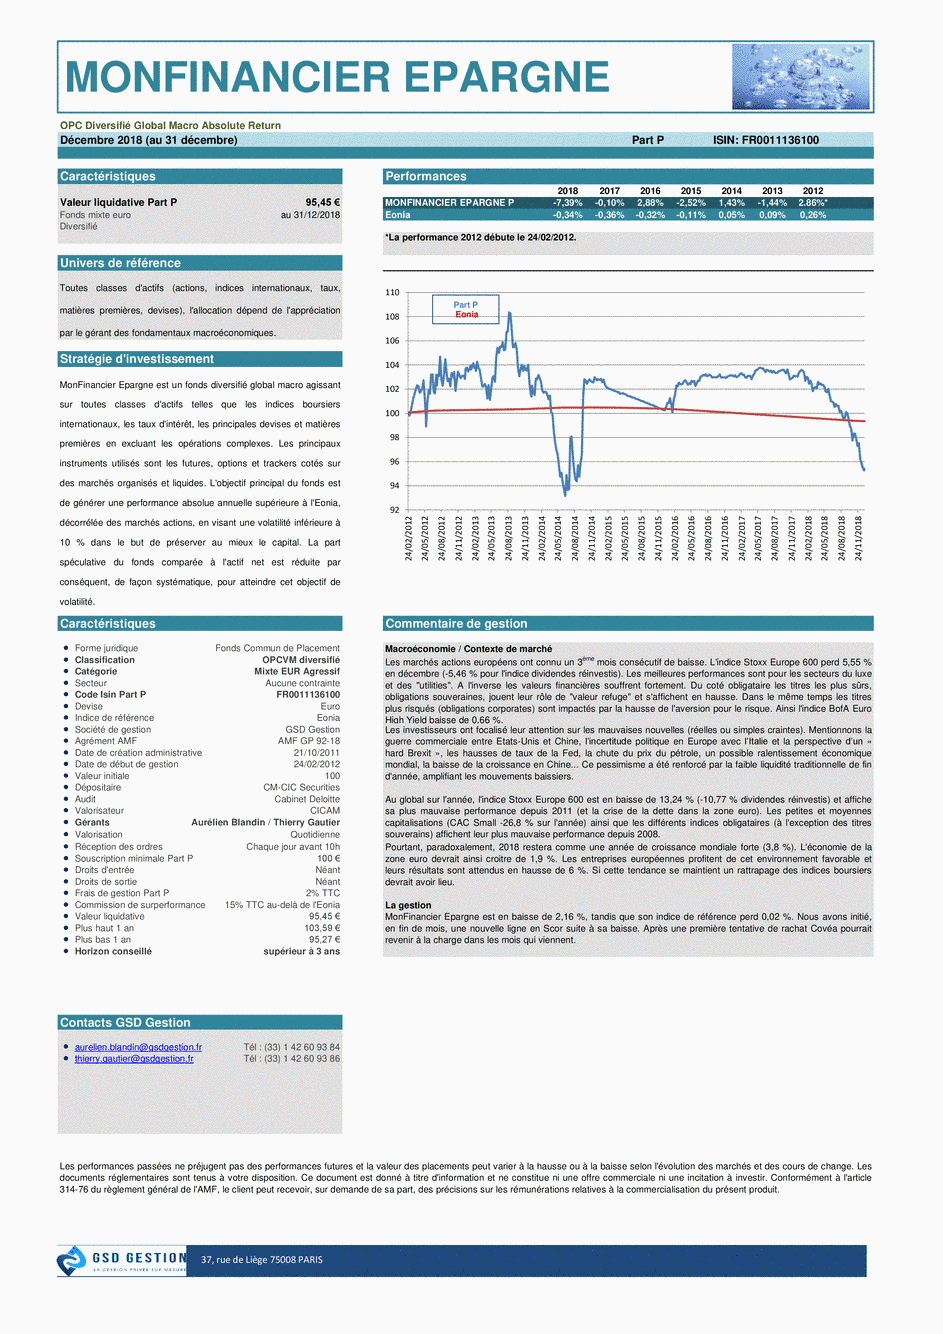 Reporting Monfinancier Epargne P - 09/01/2019 - undefined